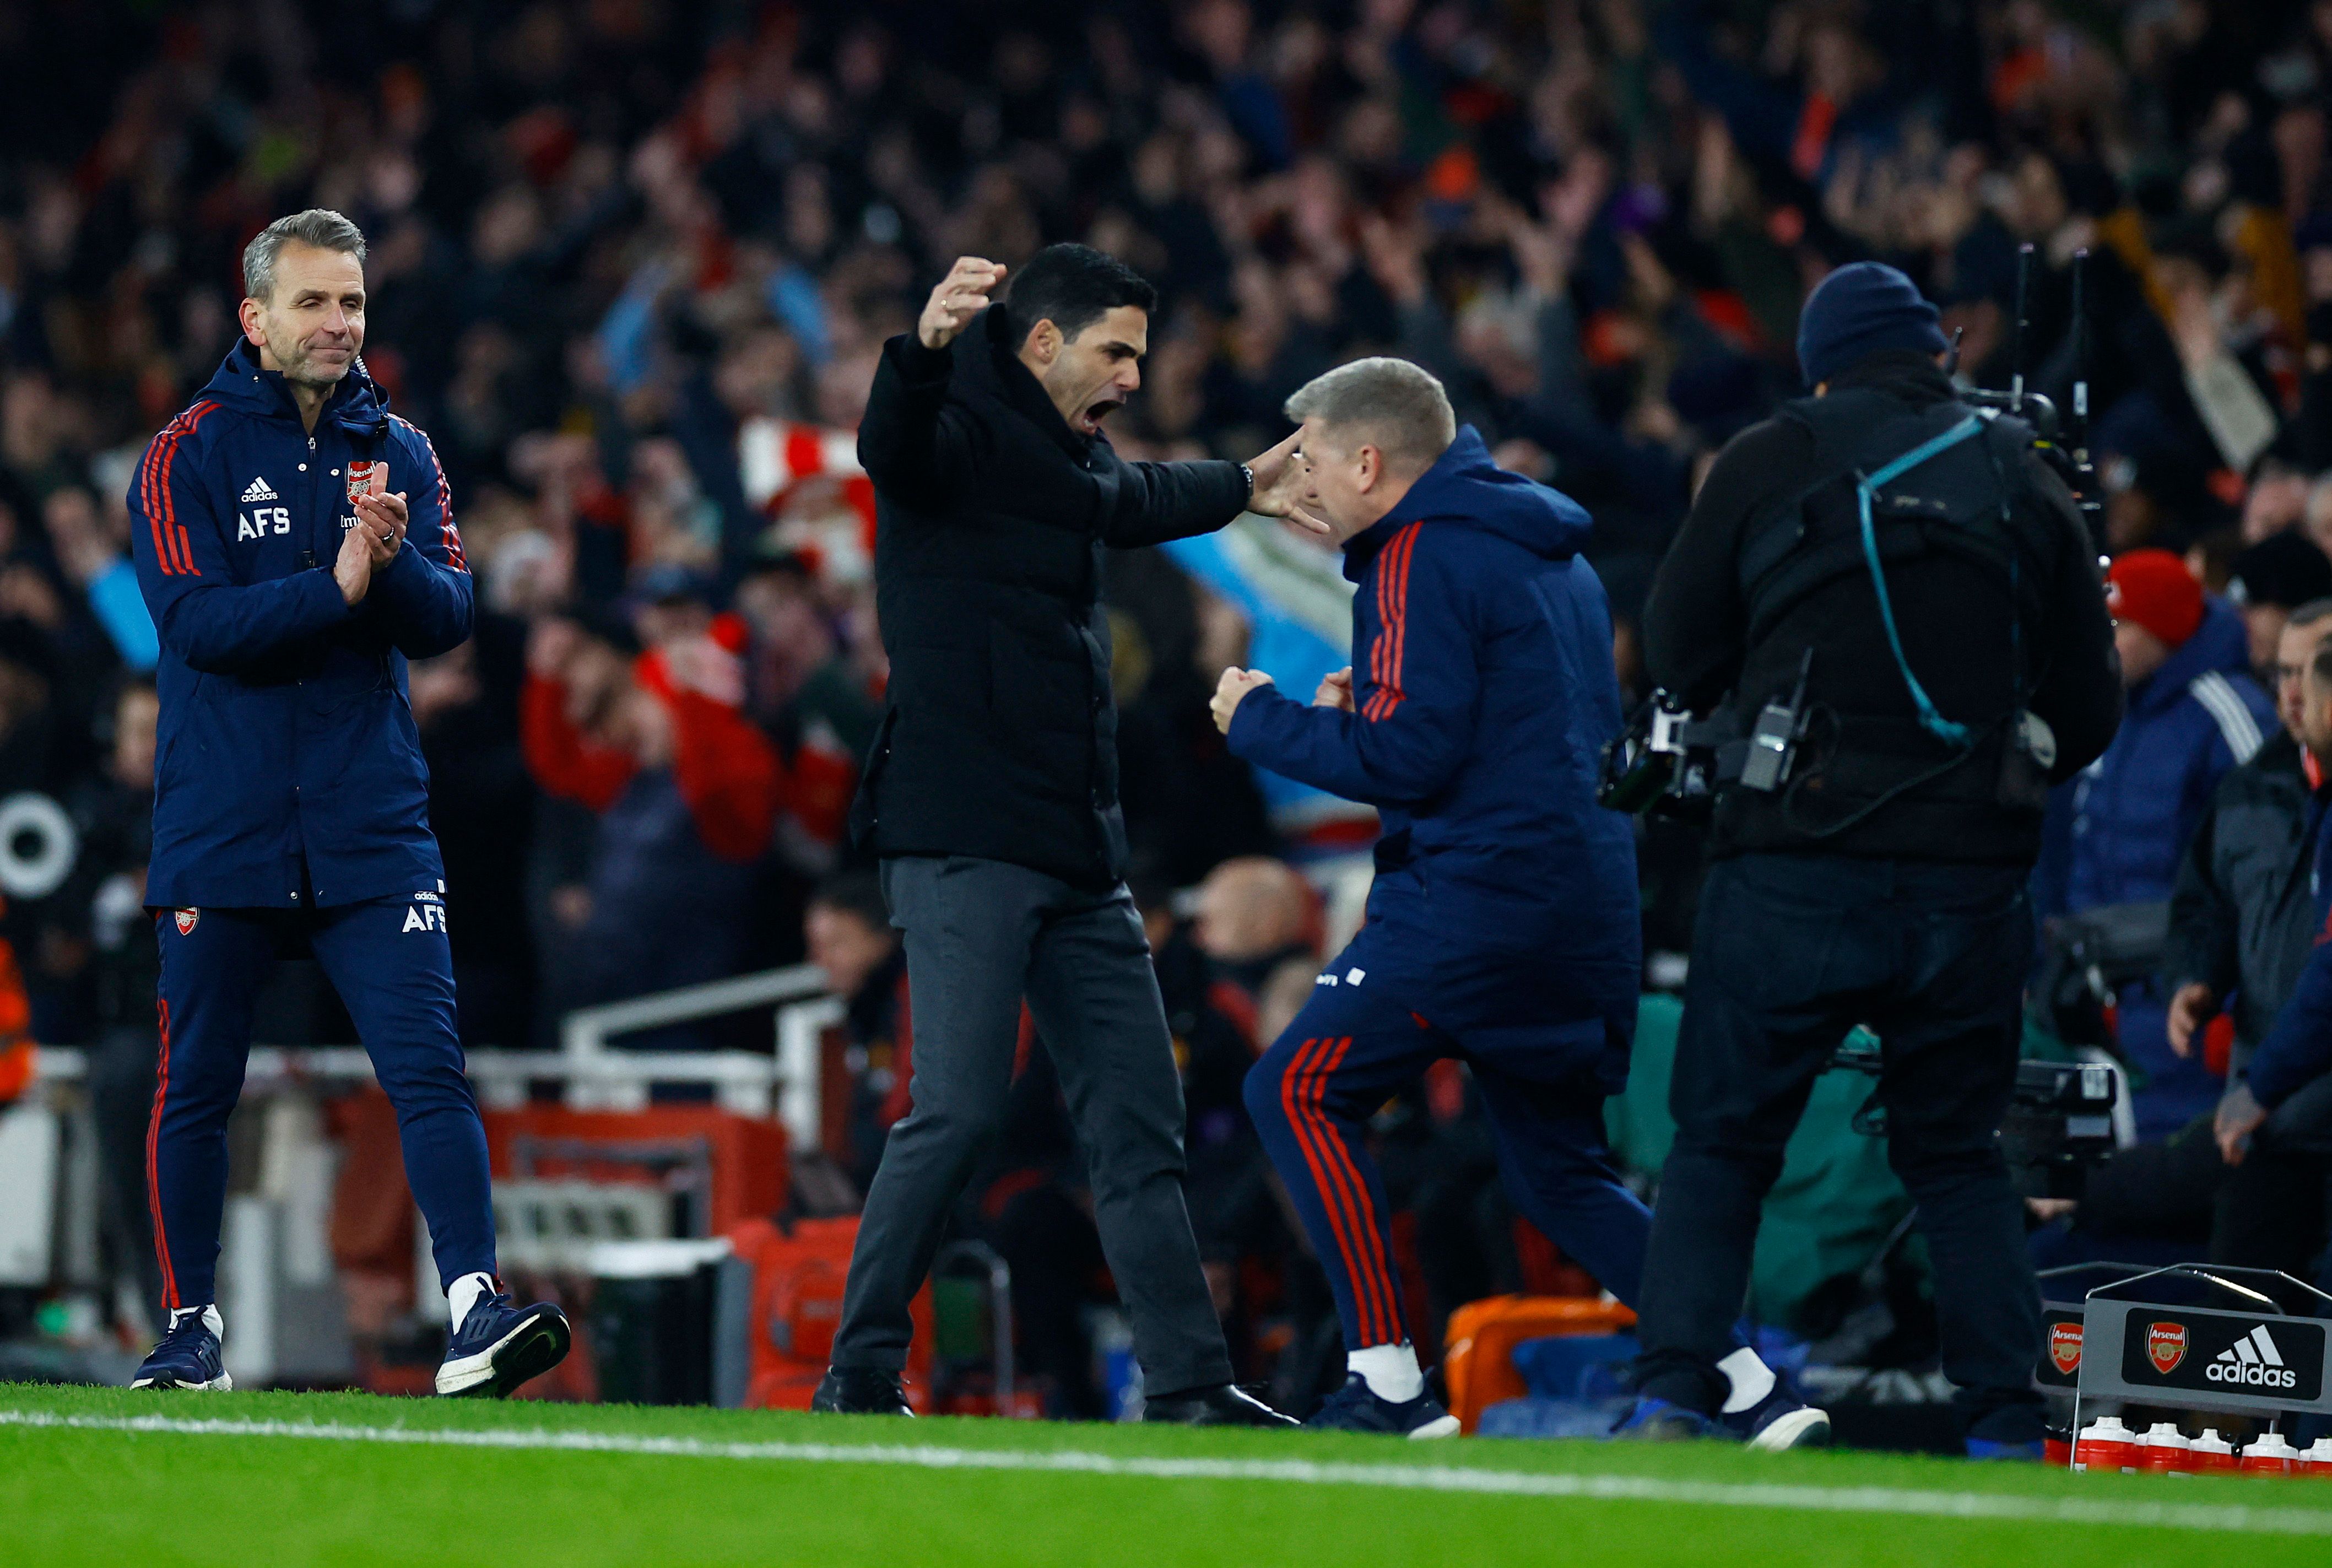 Arsenal manager Mikel Arteta celebrating after win